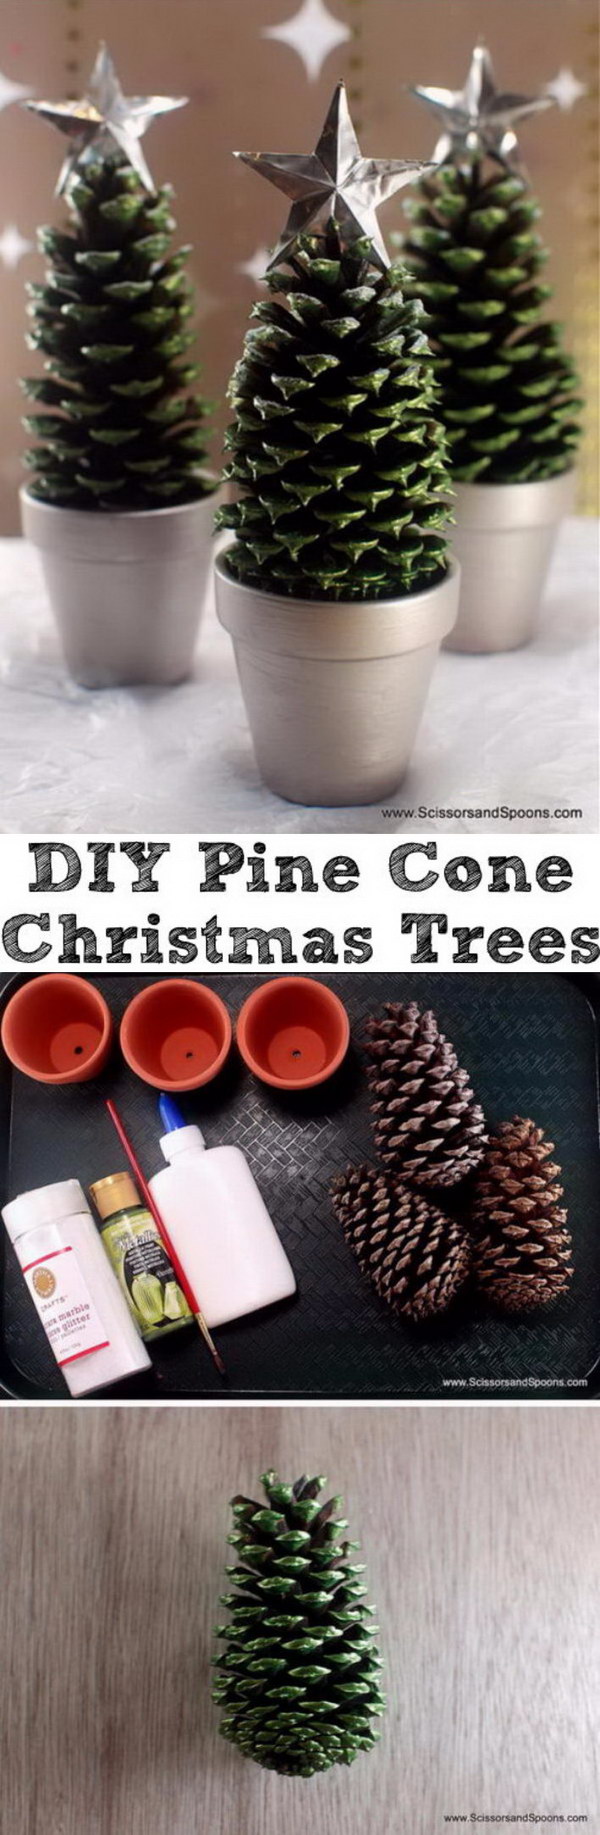 Pine Cone Christmas Trees. 